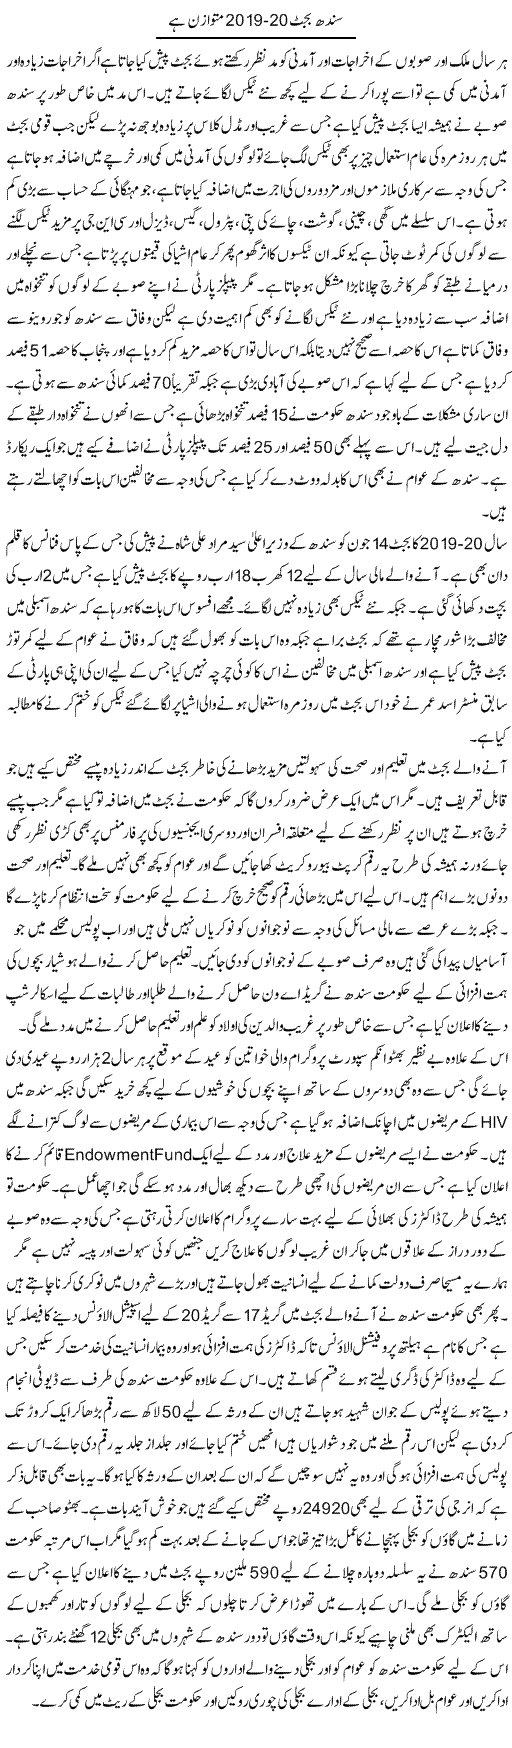 Sindh Budget 2019-20 Mutawazan Hai | Liaqat Rajpar | Daily Urdu Columns